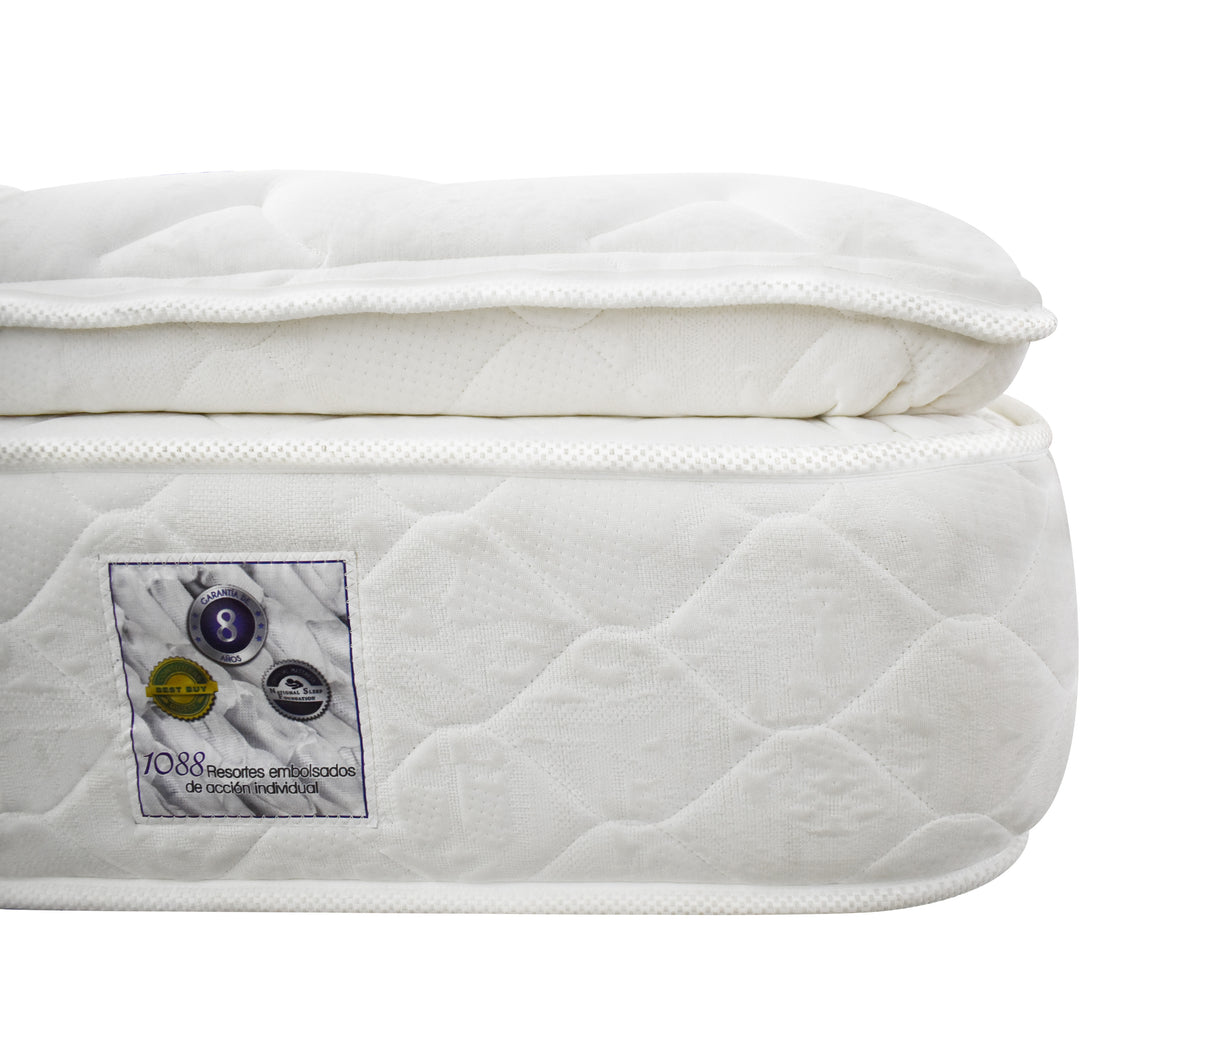 Colchón king (200cm X 200cm) perfect slepper 1 pillow memory foam encapsulado Serta